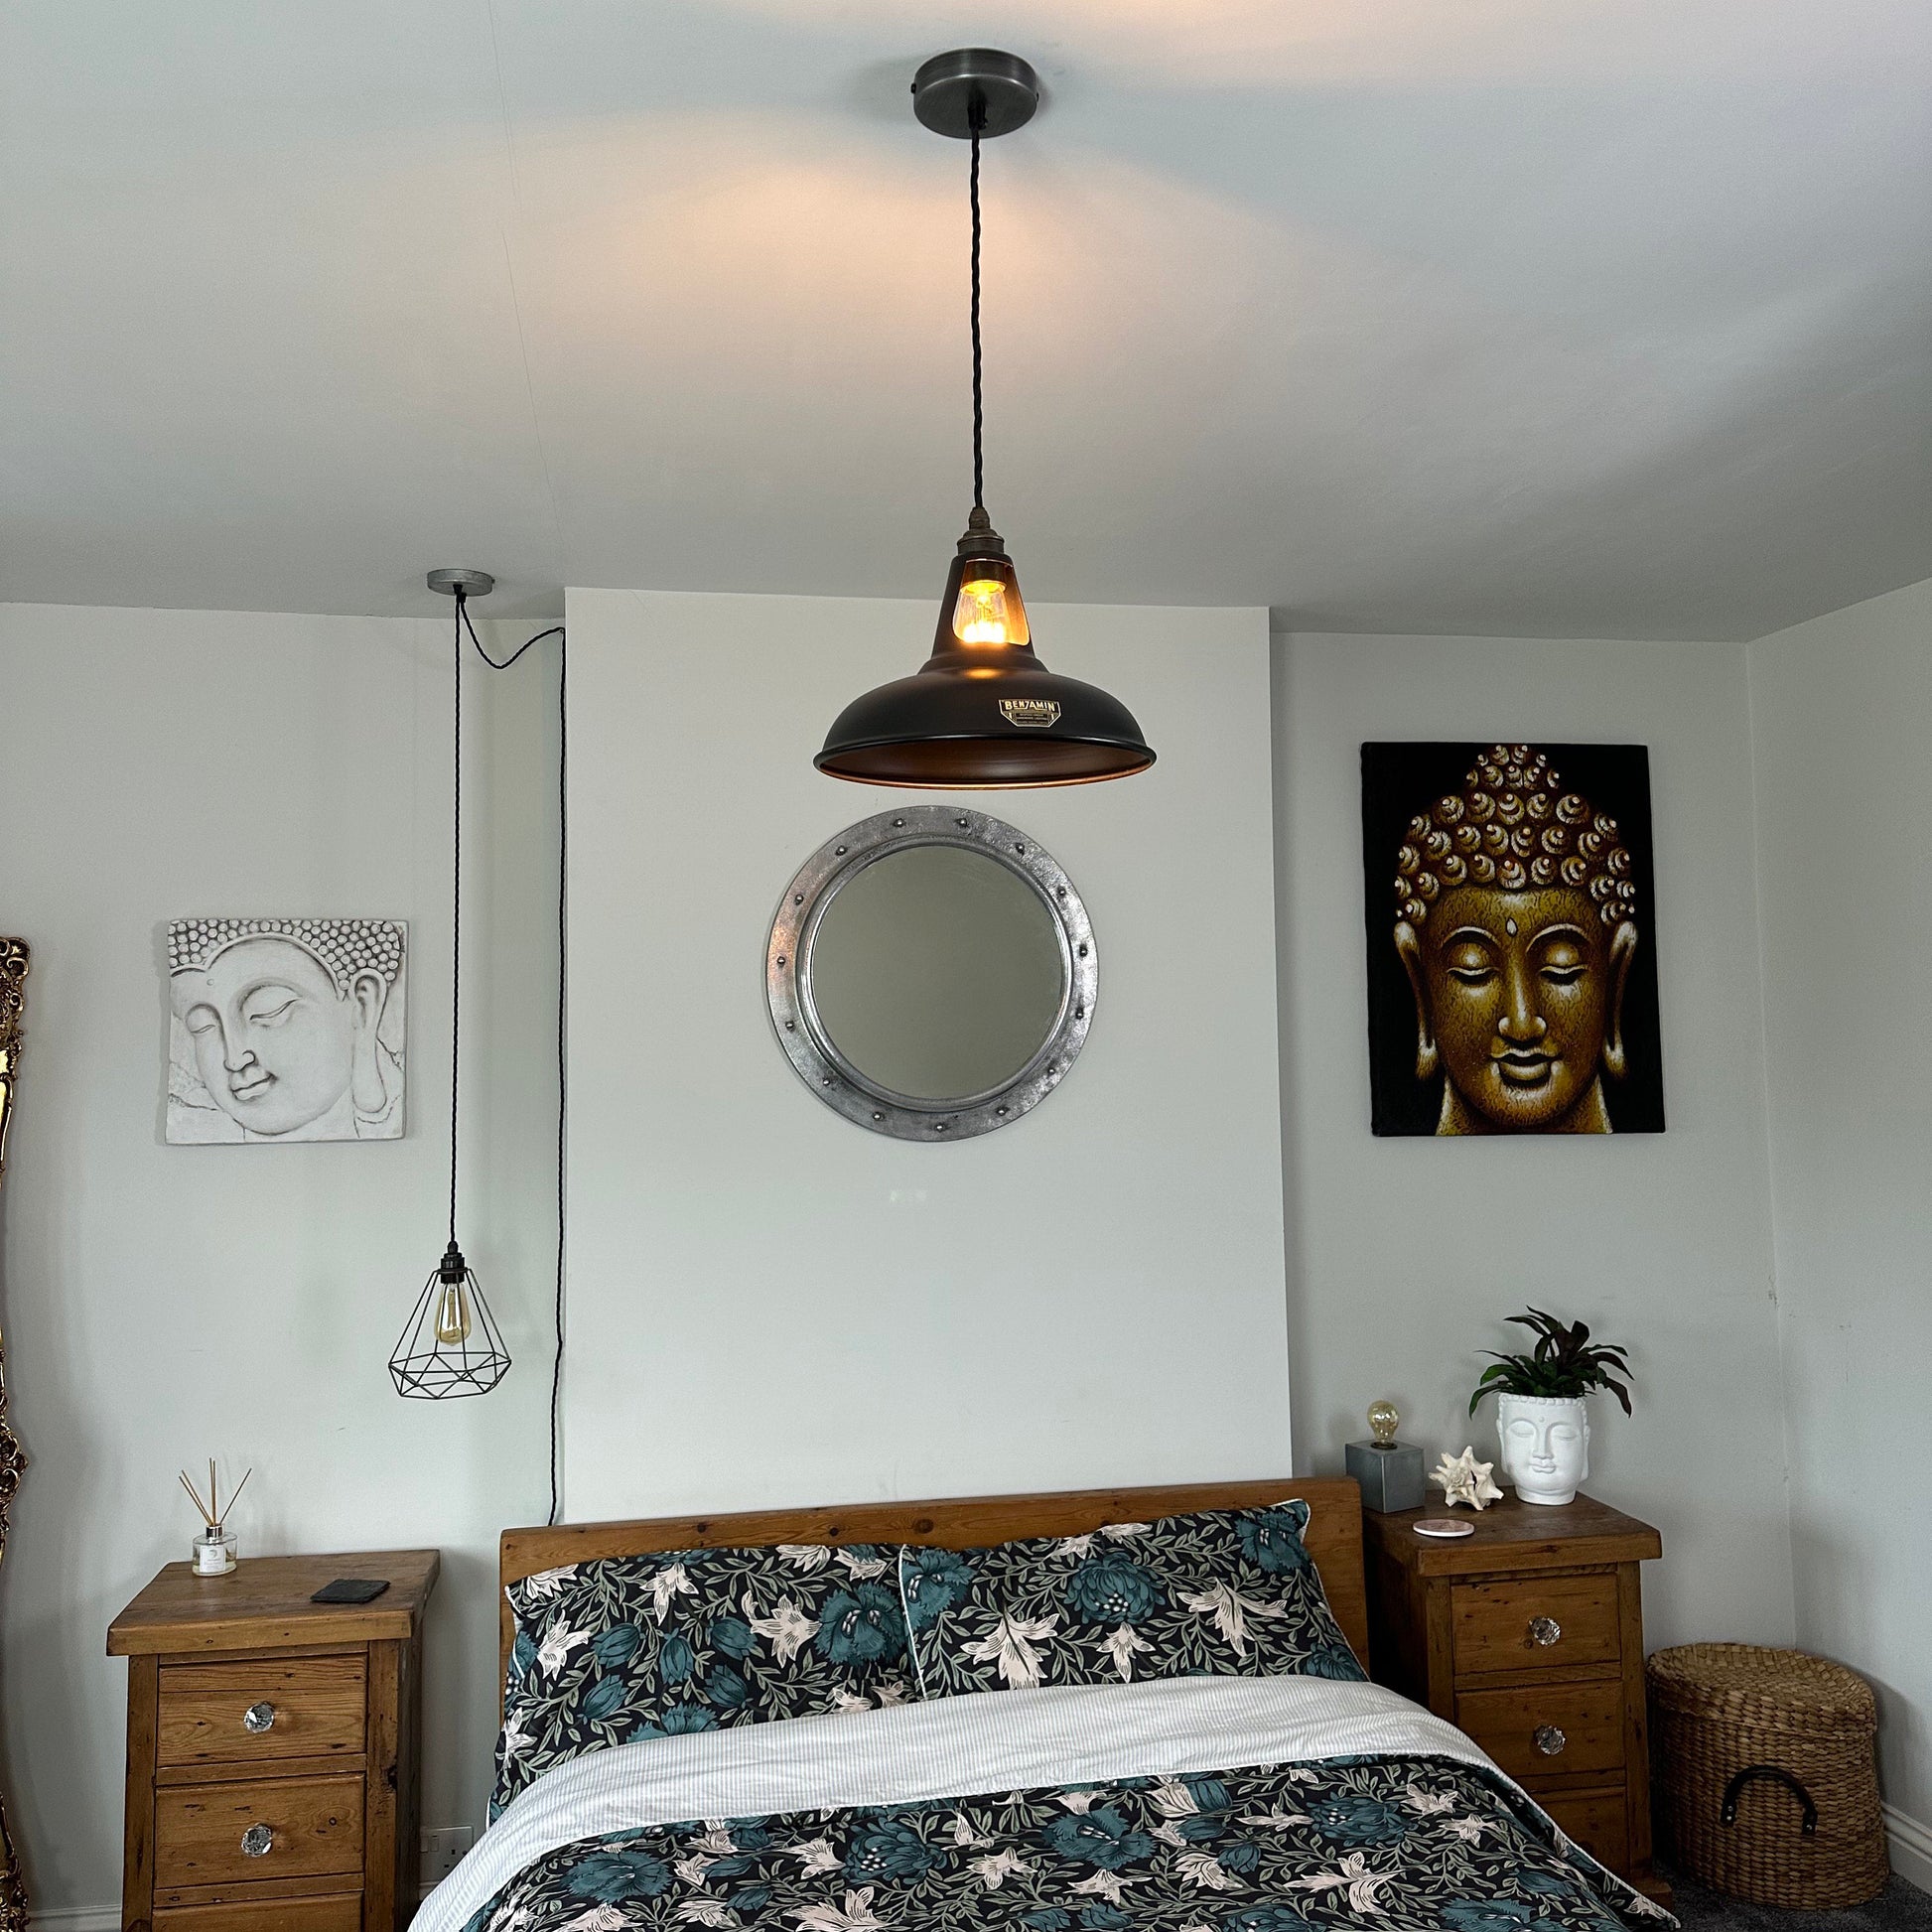 Cawston ~ Matt Black Solid Shade Slotted Design Pendant Set Light | Ceiling Dining Room | Kitchen Table | Vintage Filament Bulb 11 Inch